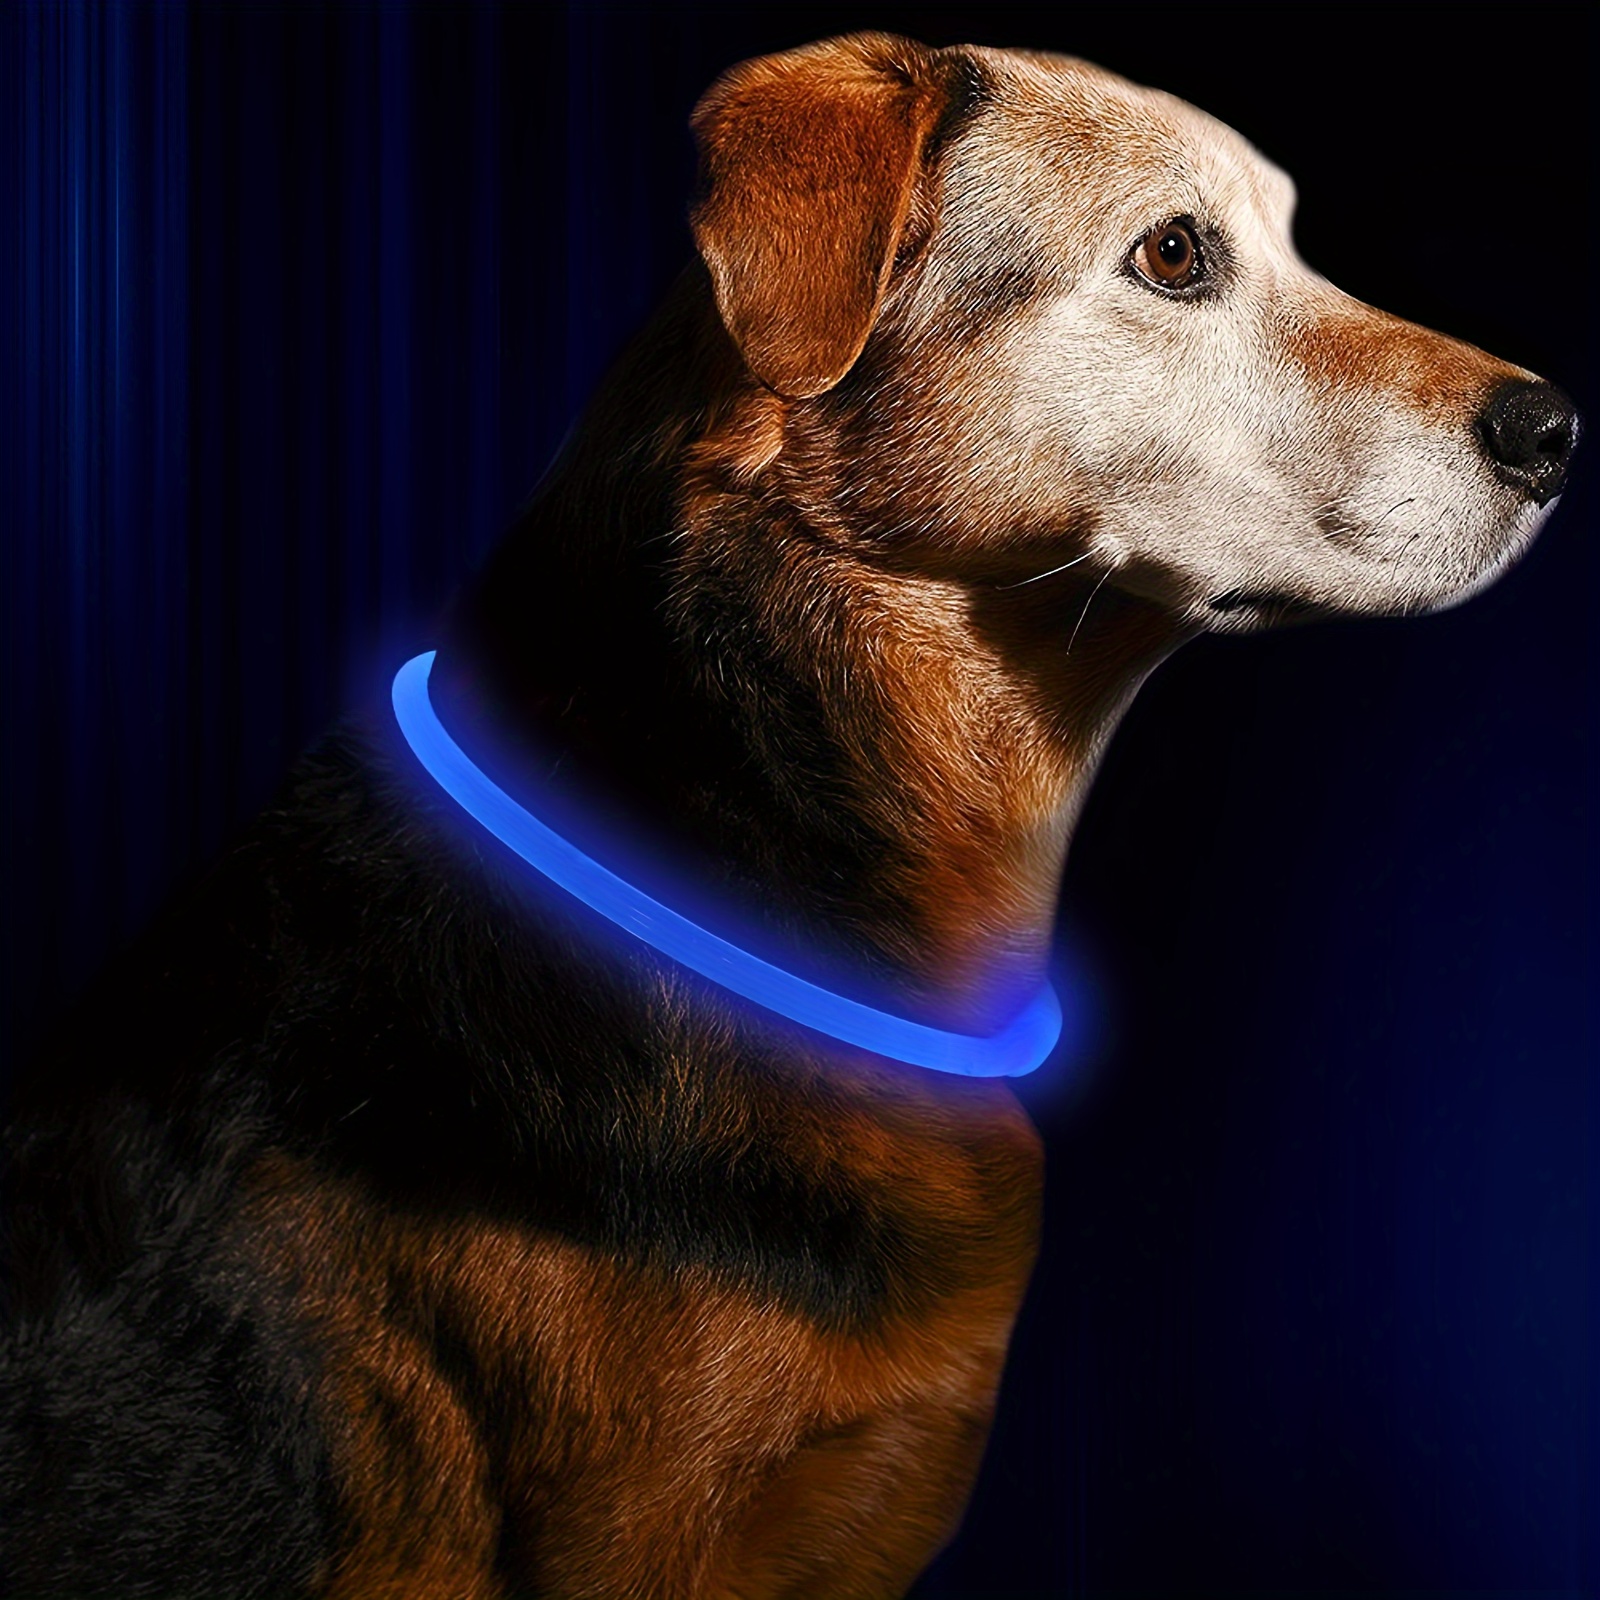 Collar de perro LED iluminación, recargable USB corte ajustable a tamaño  ultra brillante collar de luz resplandeciente – Pecheritas